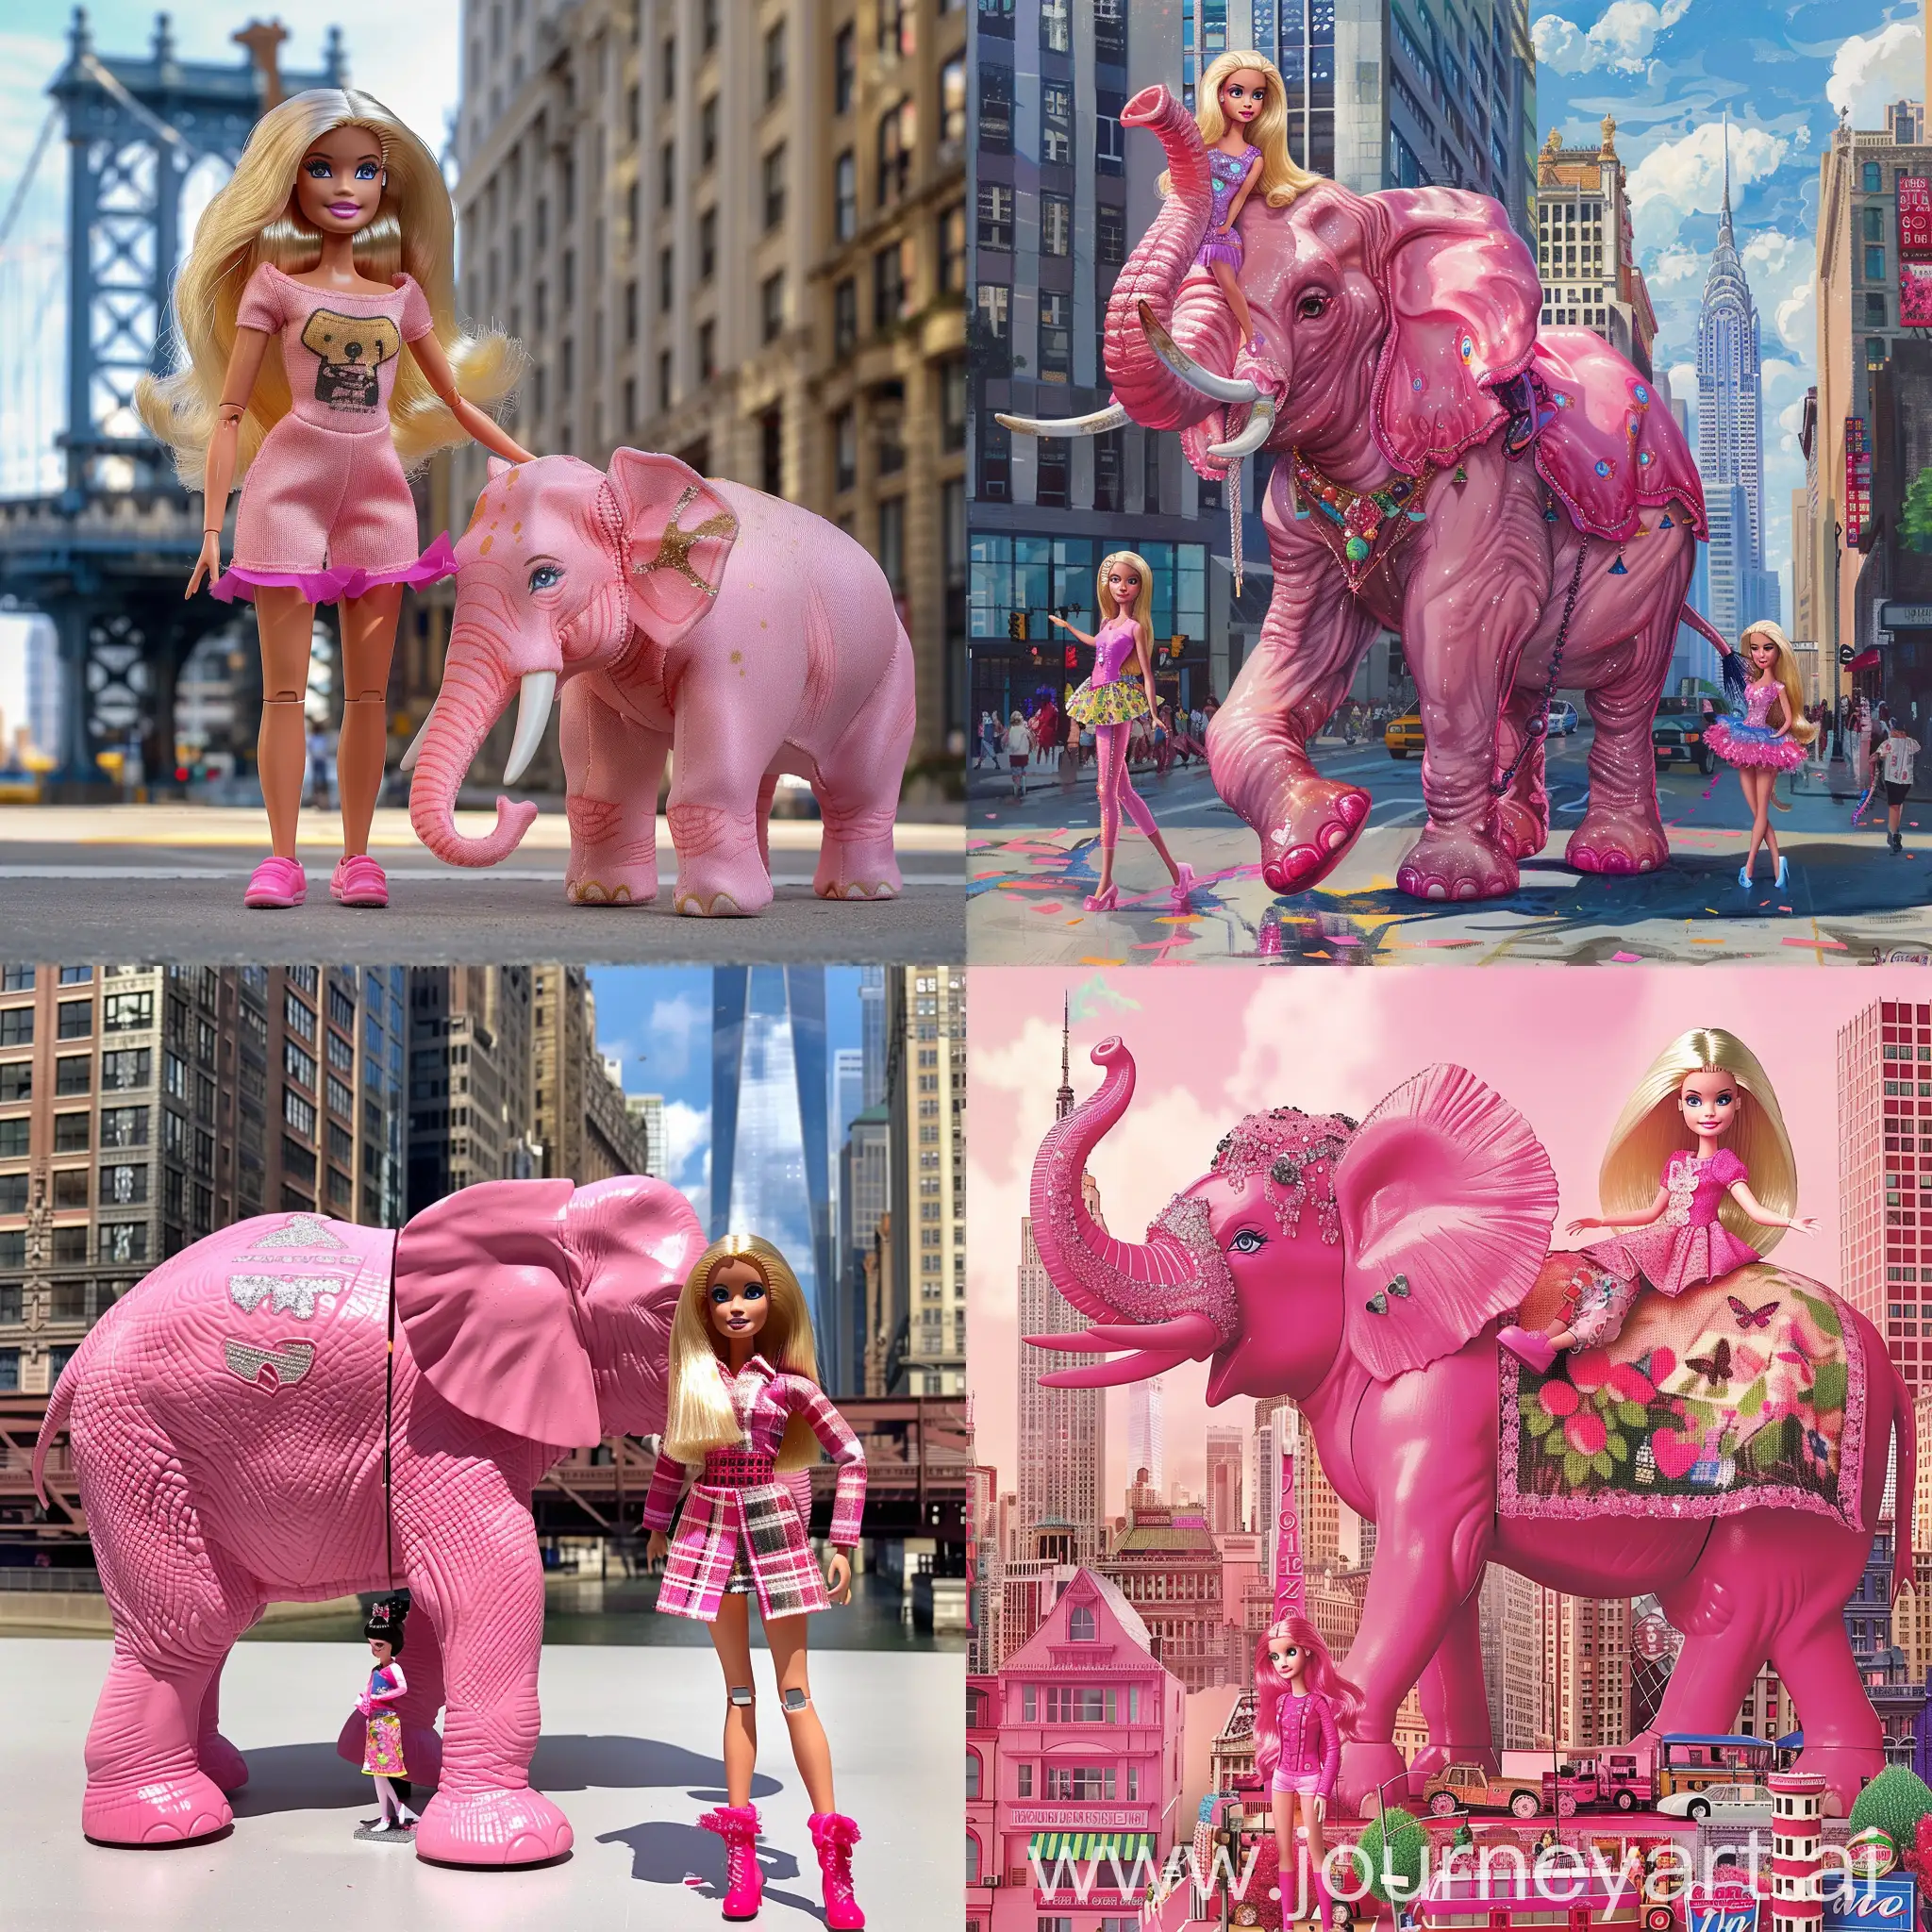 Vibrant-Urban-Adventure-Pink-Elephant-and-Barbie-Explore-the-City